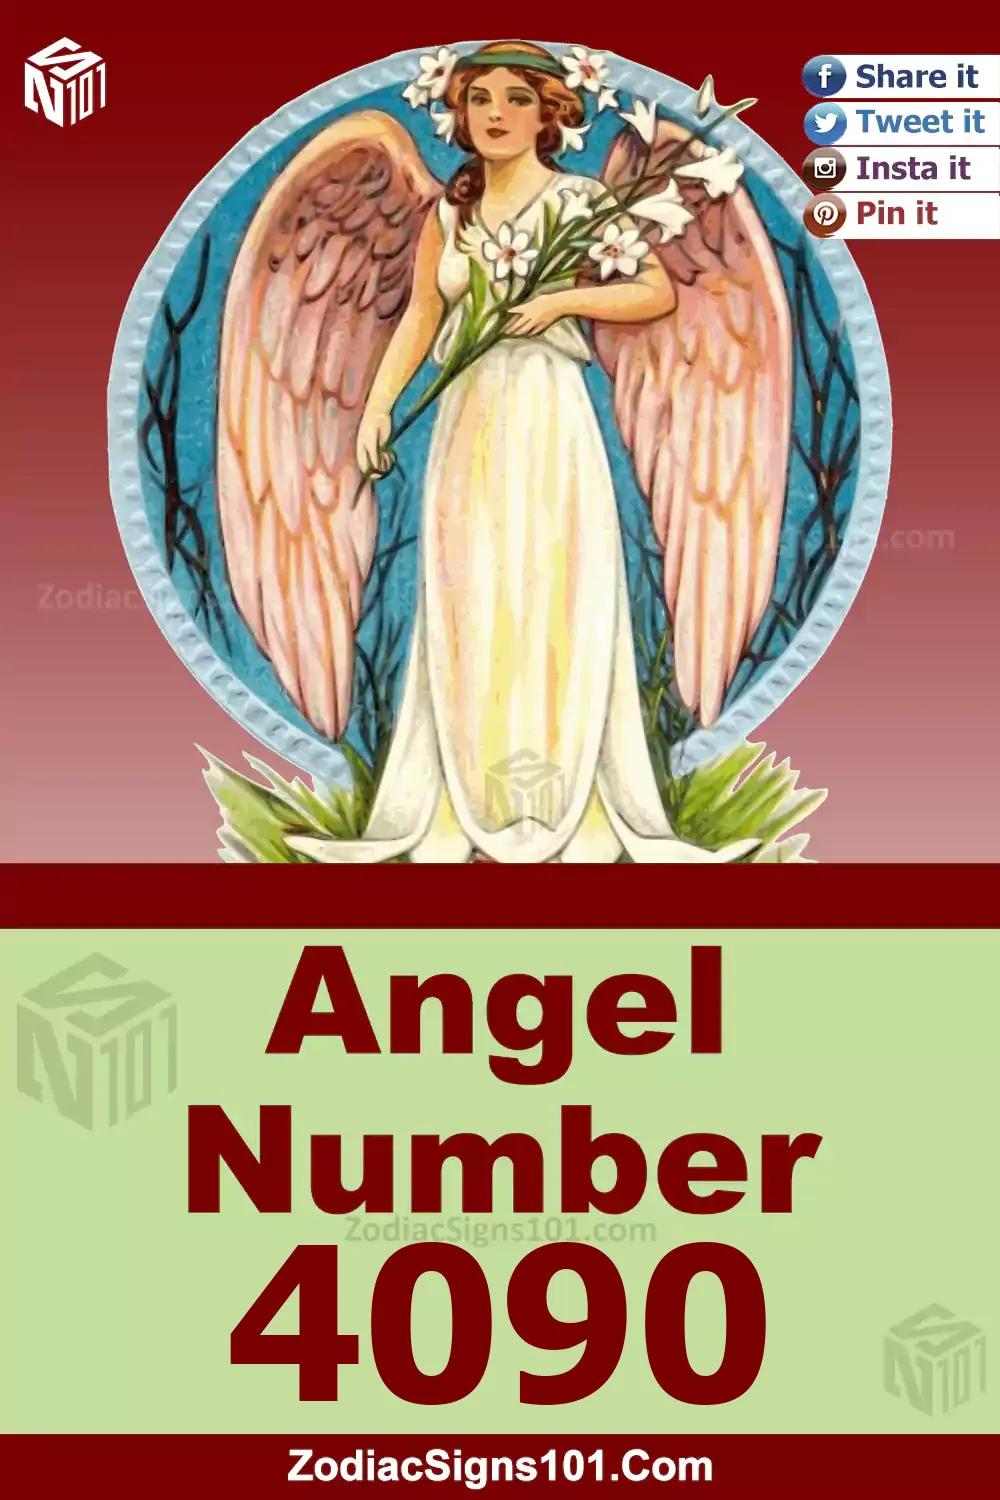 4090-Angel-Number-Meaning.jpg